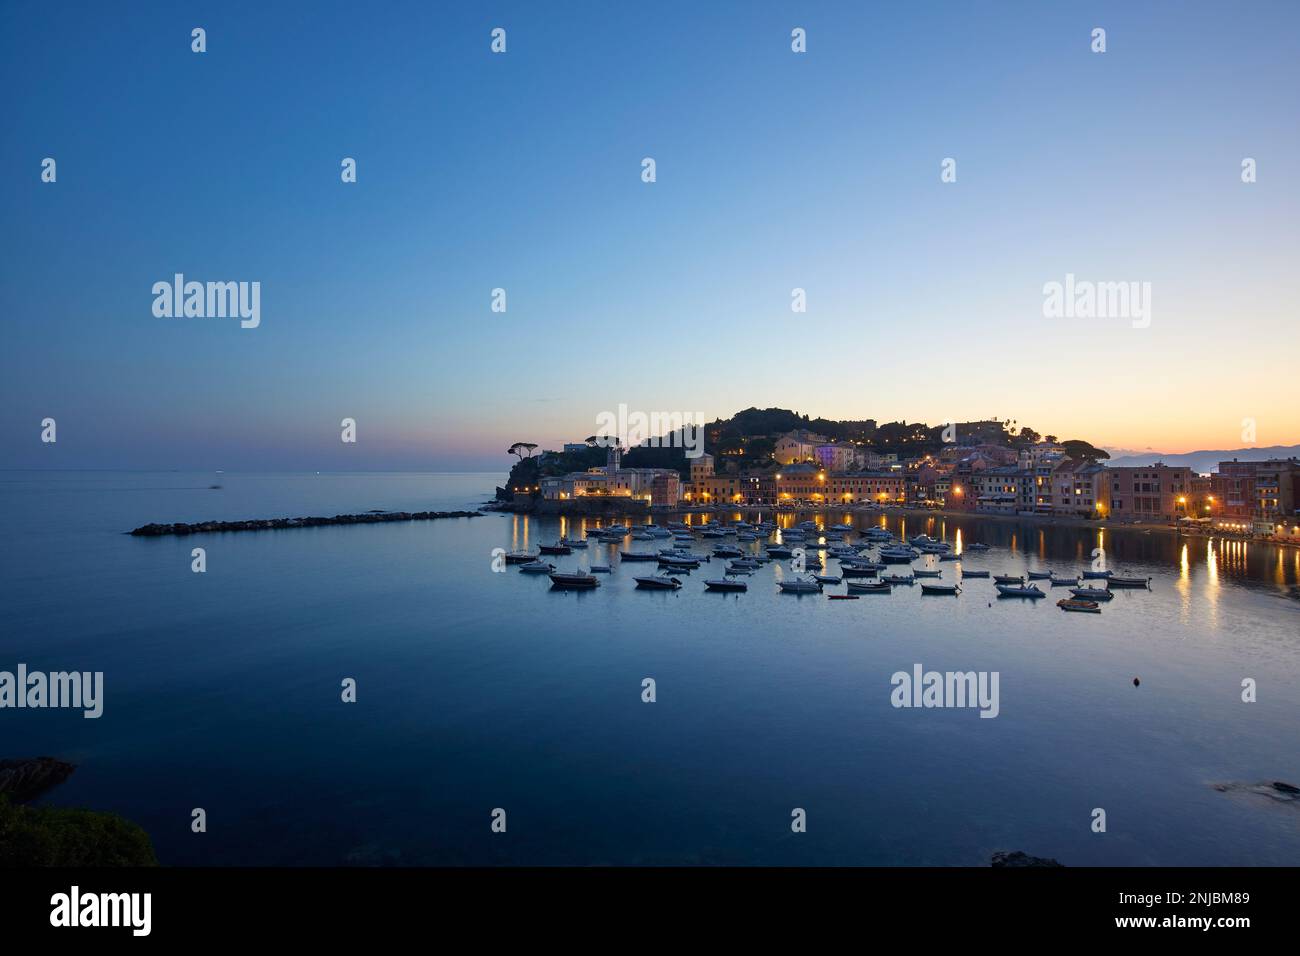 Silent bay at dusk, Sestri Levante, Italy Stock Photo